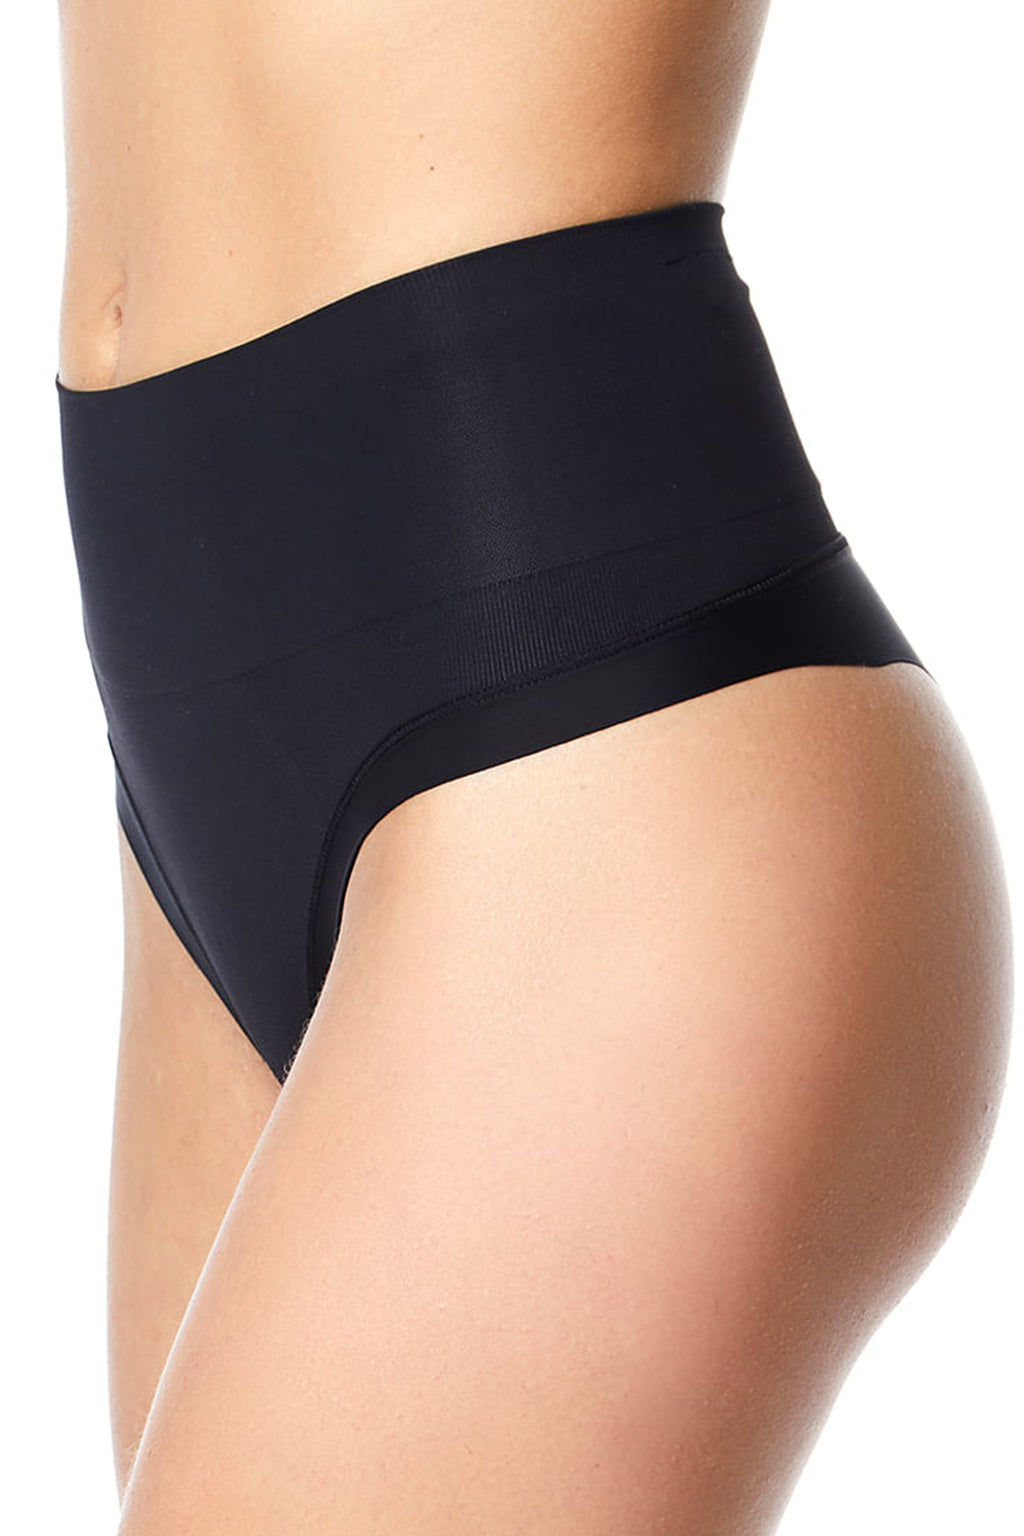 Lupo Seamless Shapewear G-String Thongs Brief Tummy Control